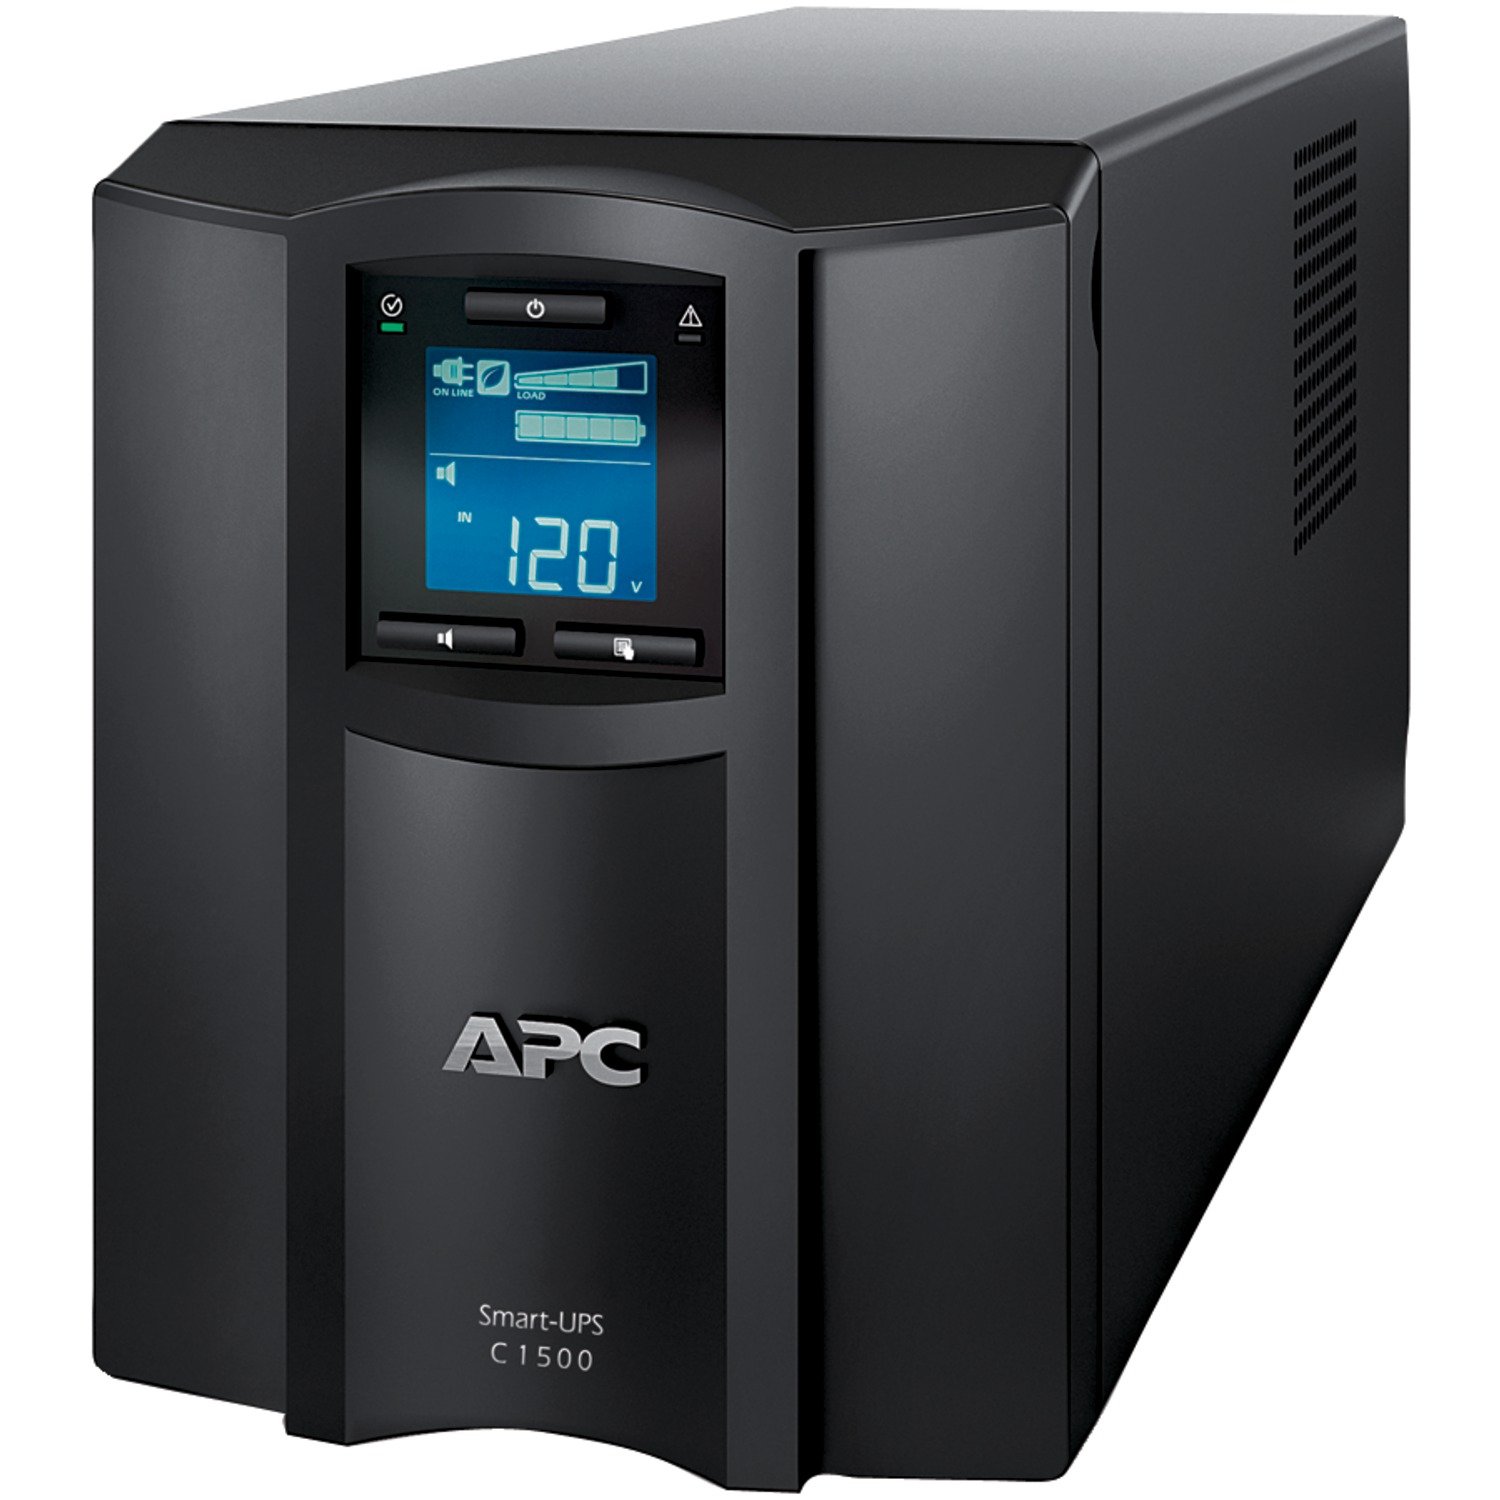 Apc smart ups 1500 software windows 10